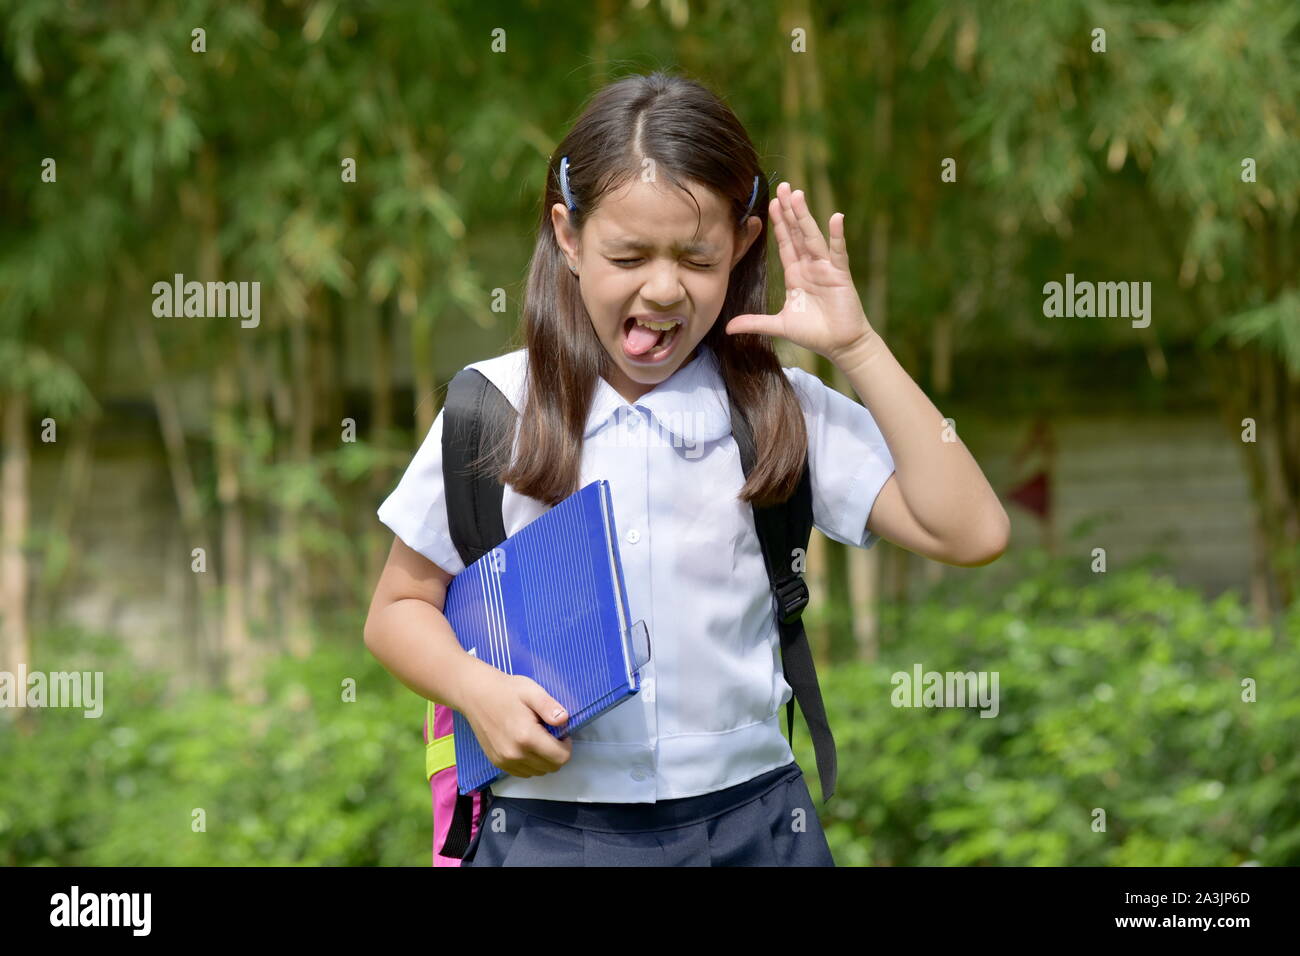 An Insane School Girl Wearing School Uniform Stock Photo - Alamy